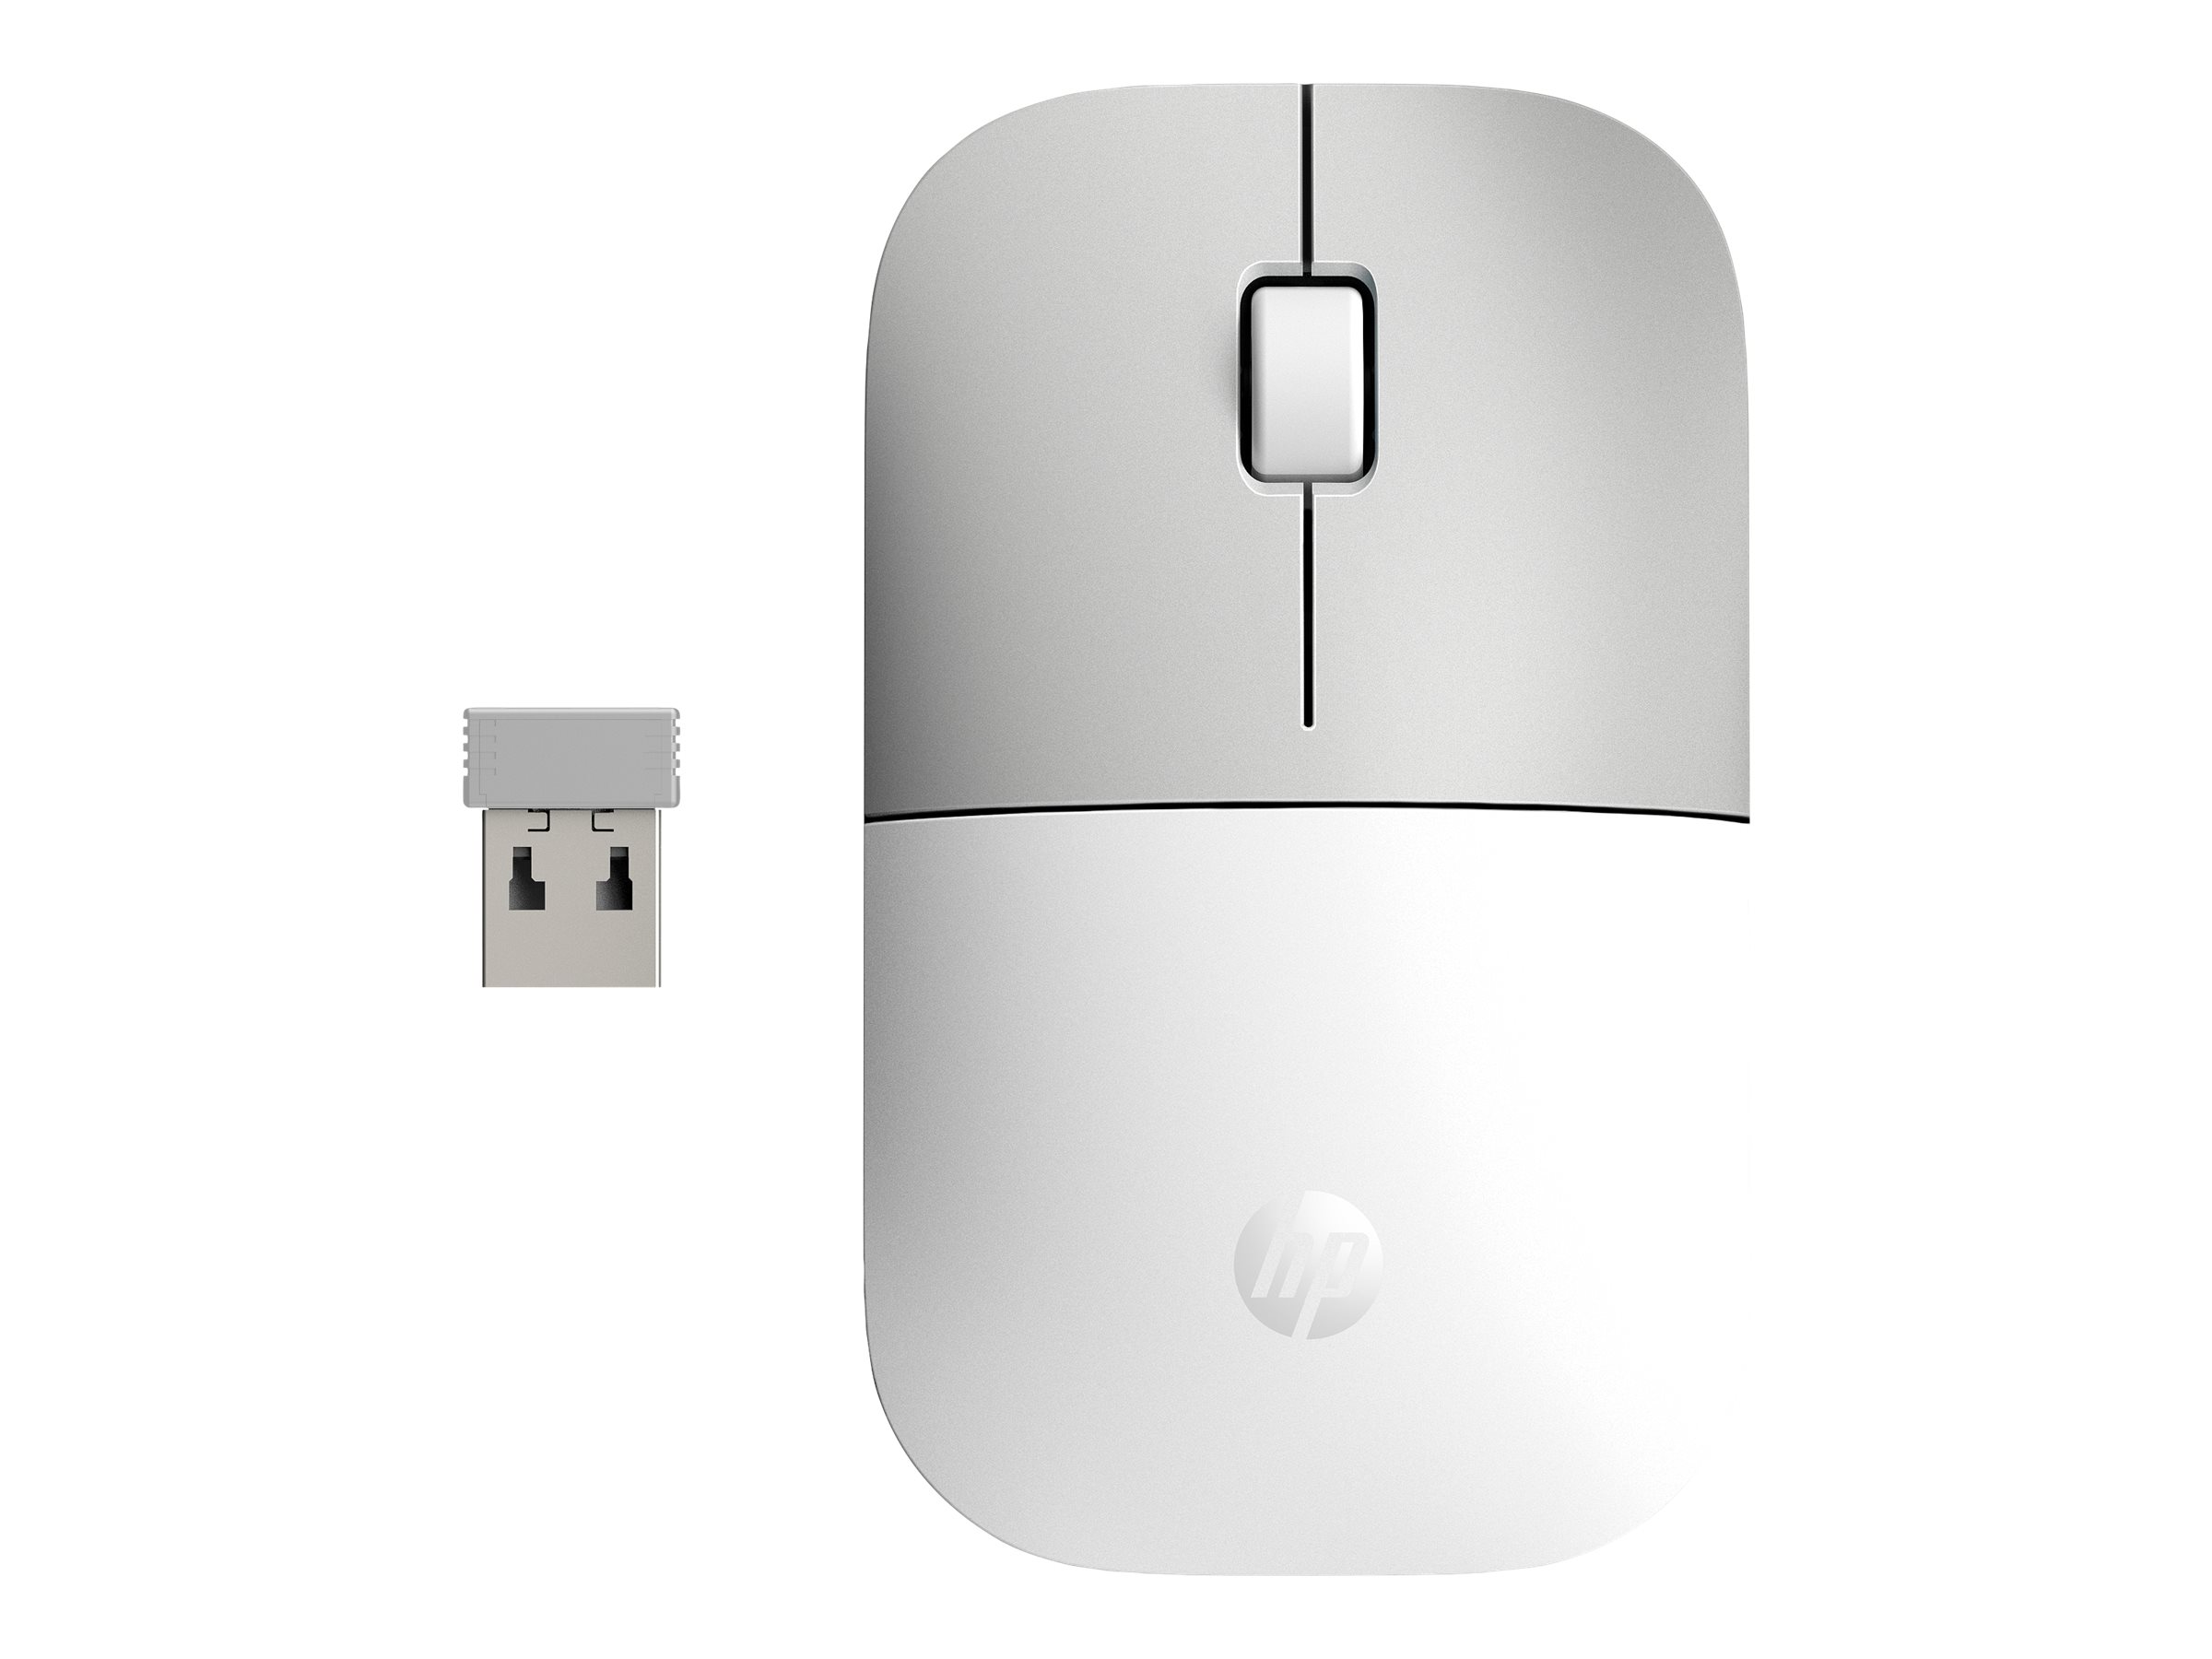 HP Z3700 Ceramic Wireless Mouse (P)